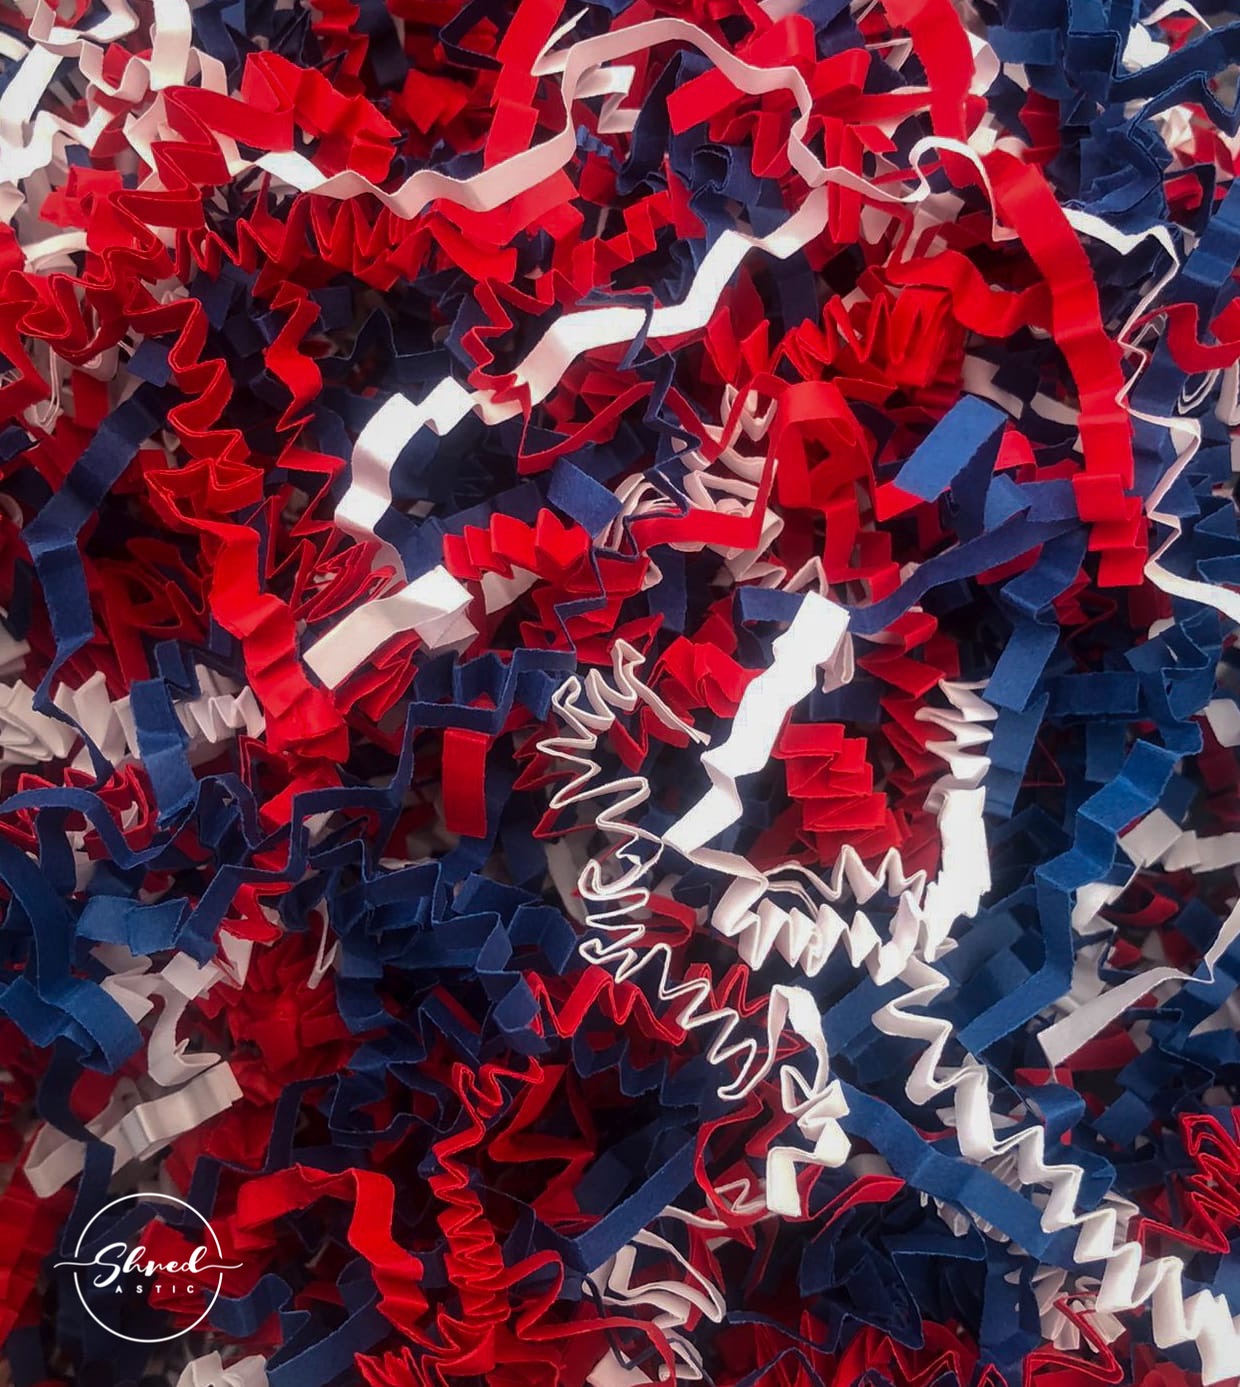 ShredAstic®️ Coronation red white blue ZigZag Crinkle Paper Mix